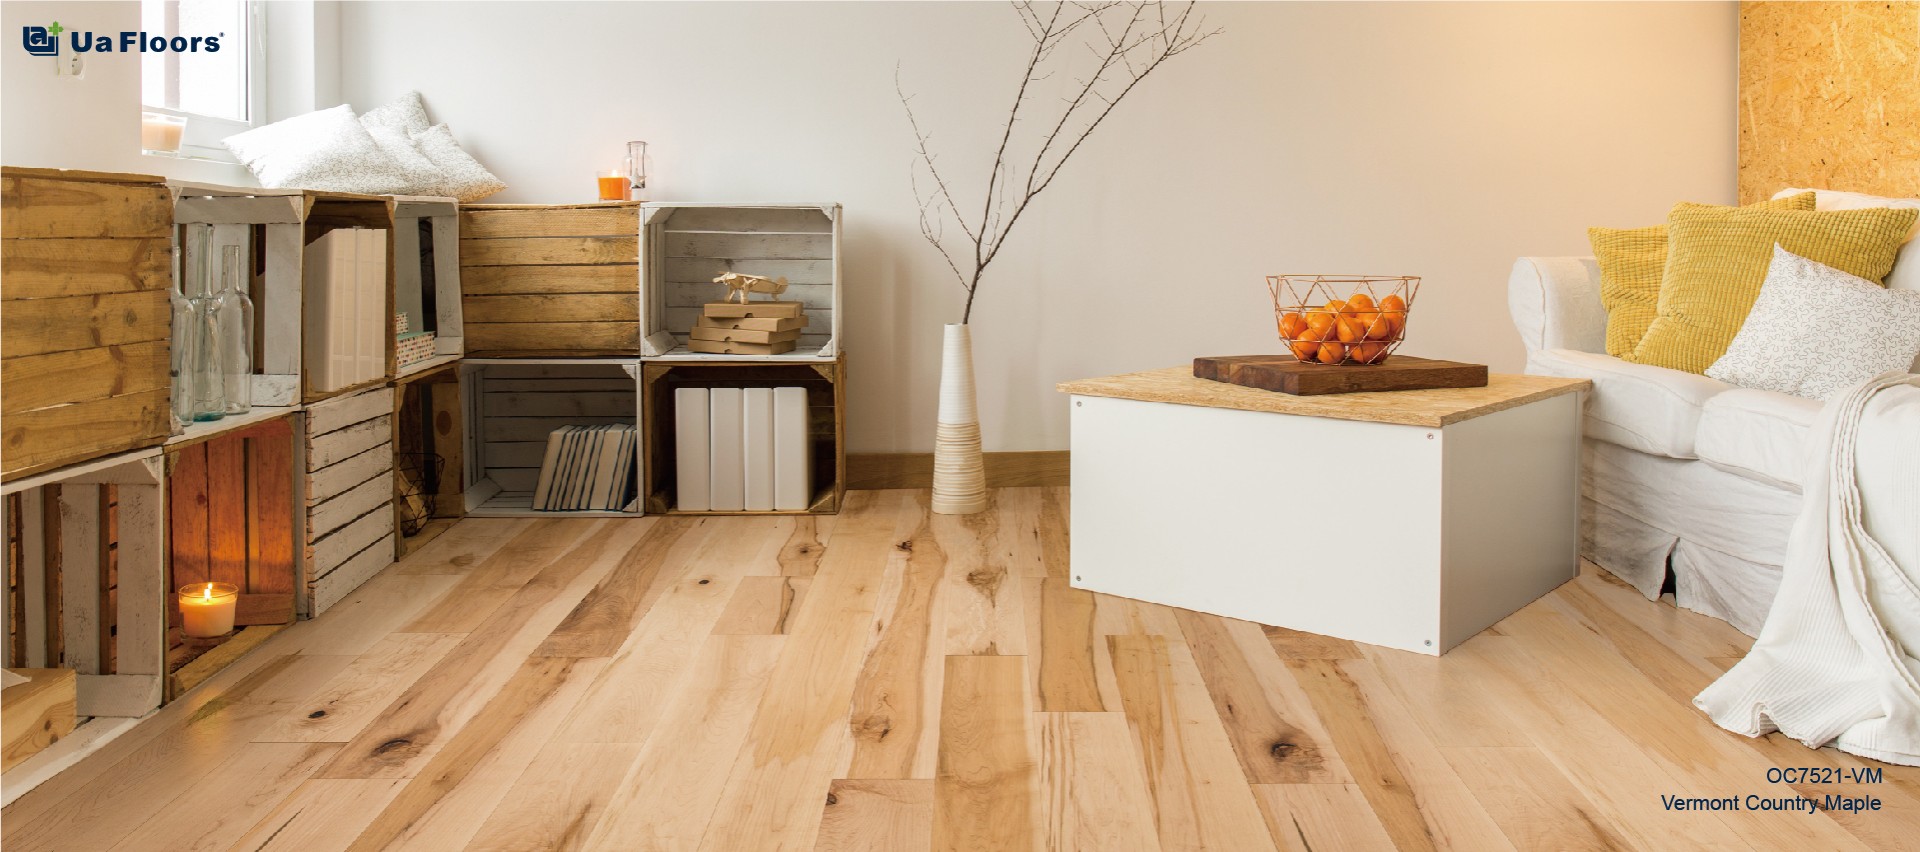 Stylish And Durable Maple Engineered, High End Engineered Hardwood Flooring